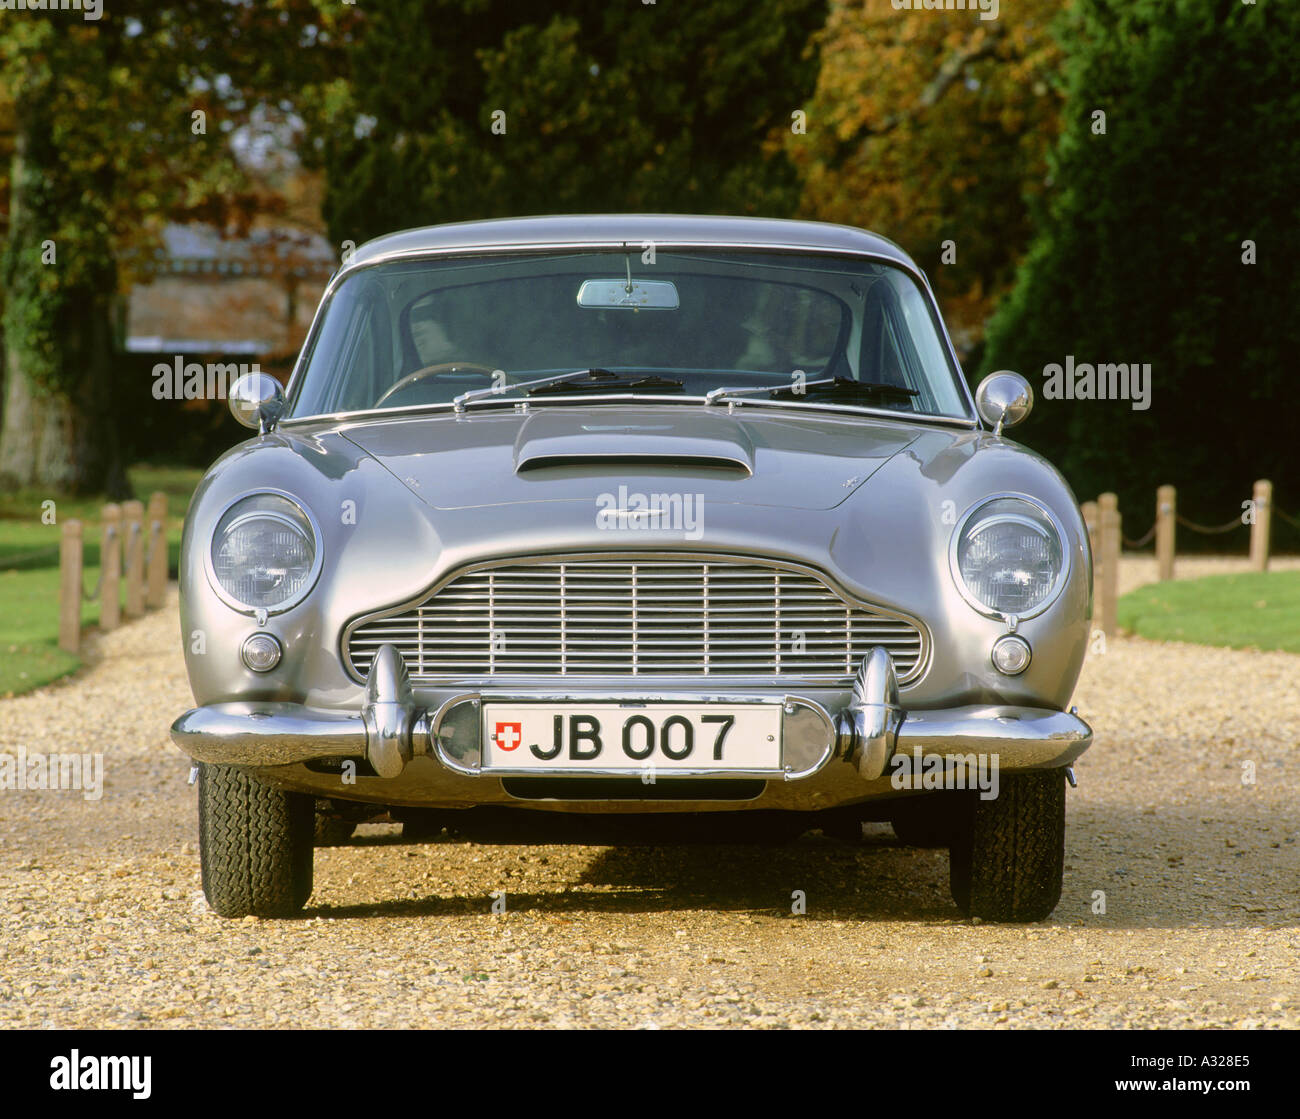 London, UK. 25th July, 2014. A miniature model of the 'James Bond